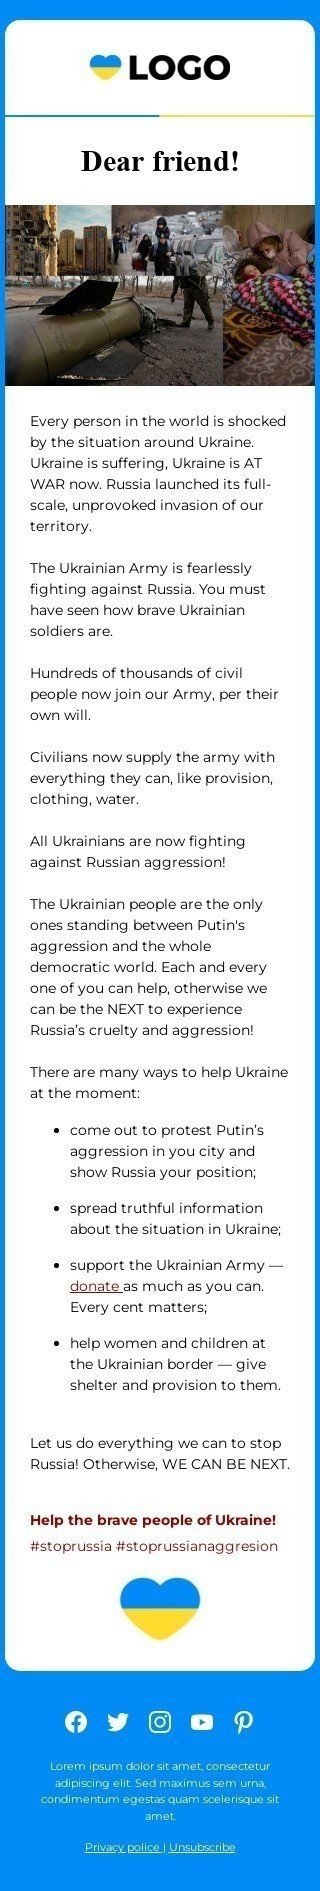 The "Spread a word Russian Aggression in Ukraine" email template Vista de móvil